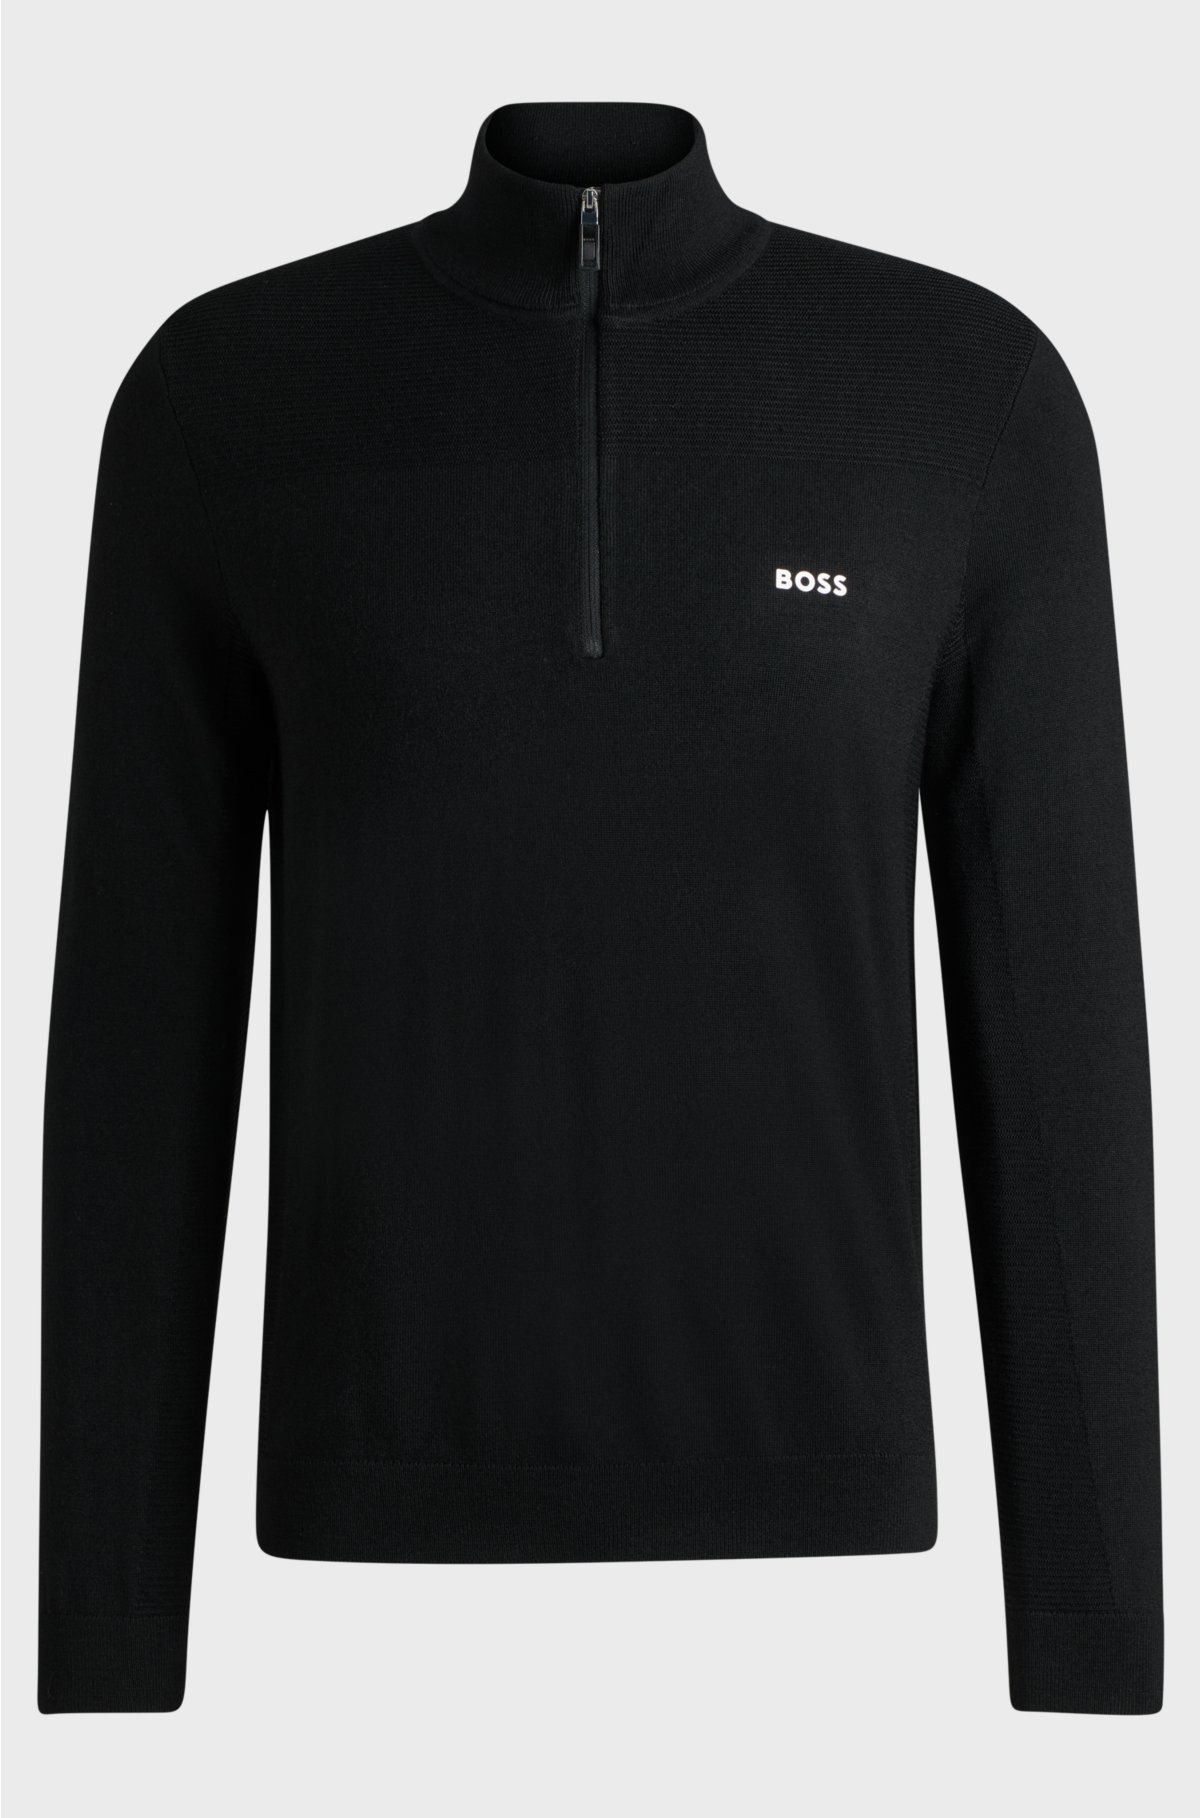 Branded zip-neck sweater in dry-flex fabric, Black